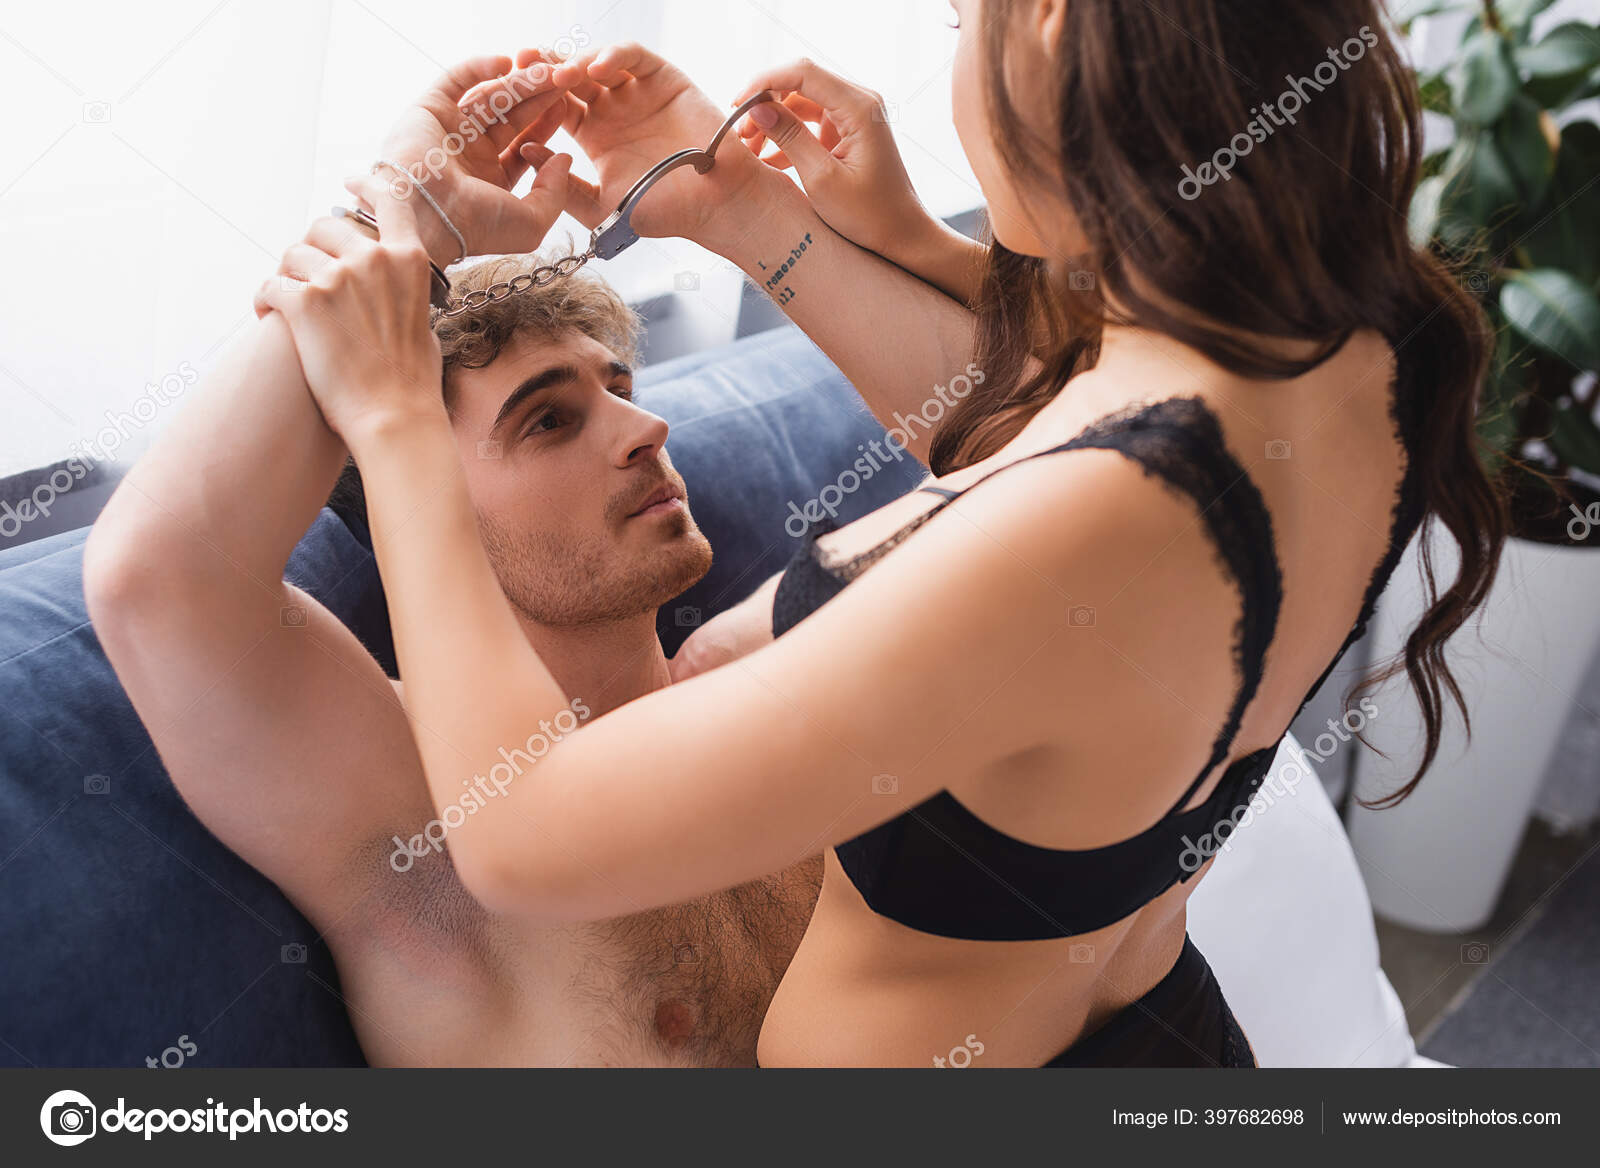 Dominant Woman Touching Handcuffed Tattooed Man Bedroom Stock Photo by ©VitalikRadko 397682698 image